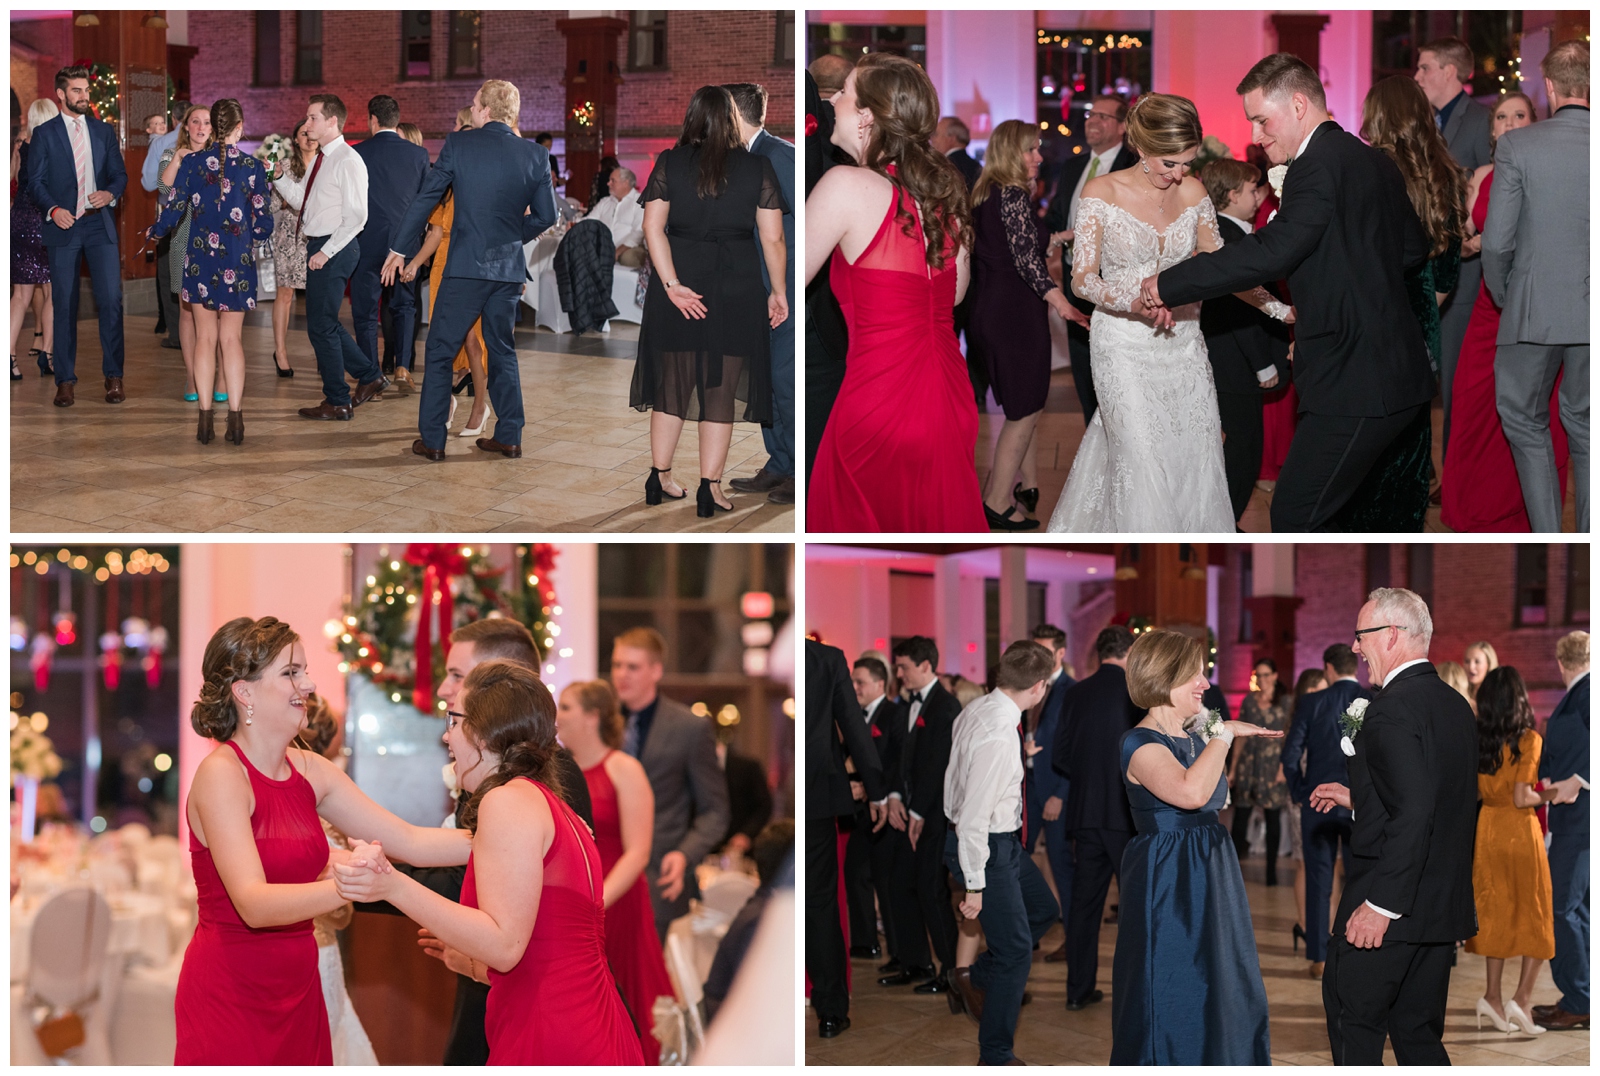 St. Charles Preparatory School wedding reception dancing